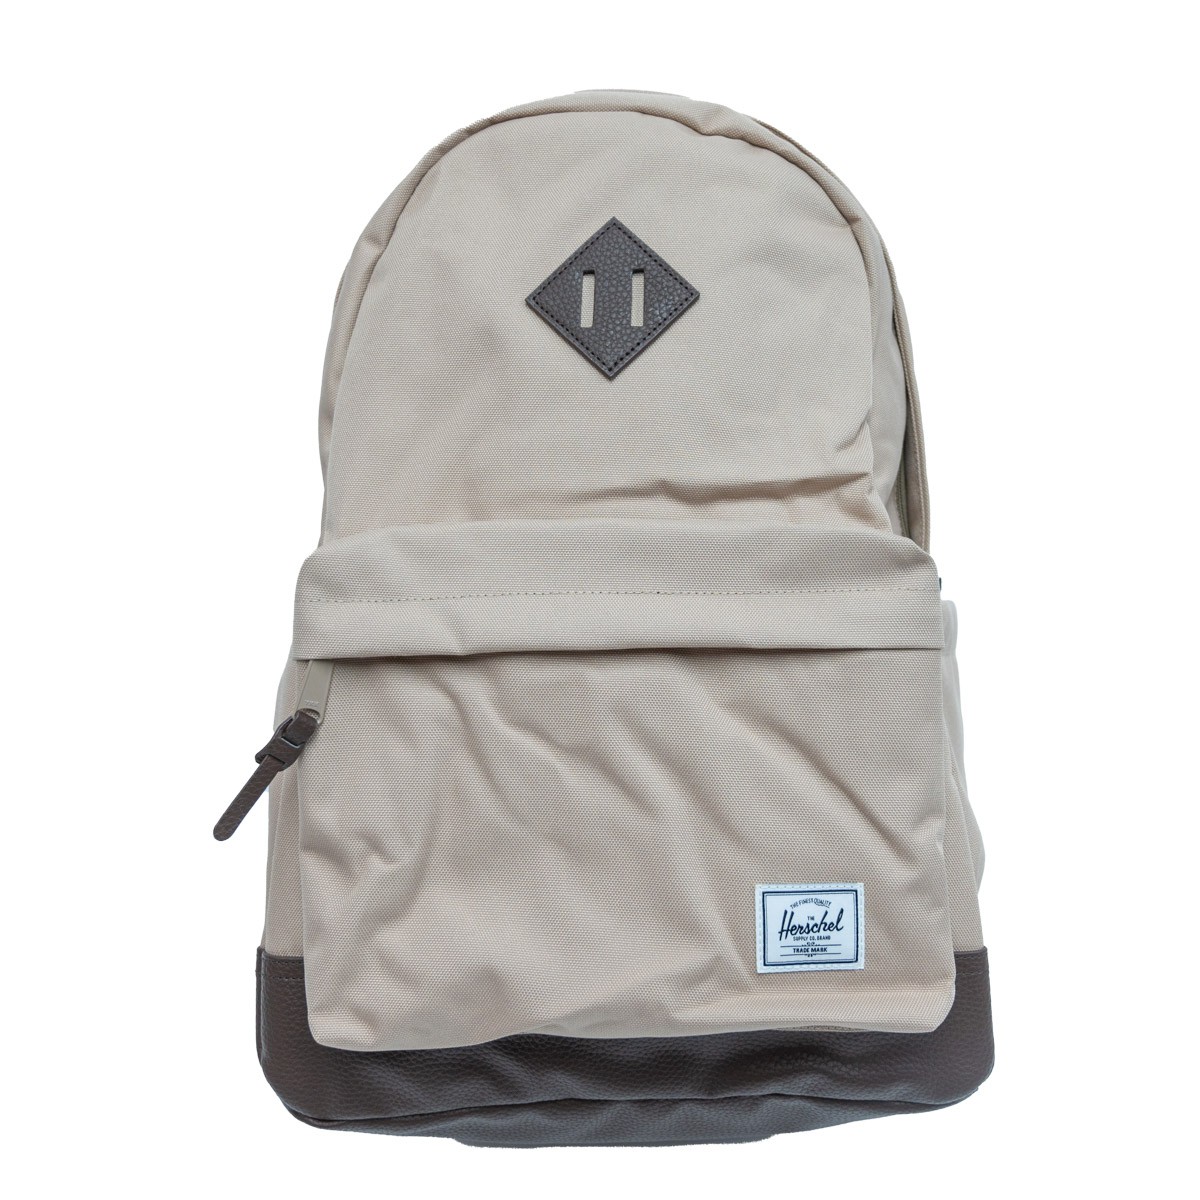 Herschel Heritage Backpack 新版本 24升 背囊背包 可放15"/16"電腦 Light Taupe/Chicory Coffee <旺角店>